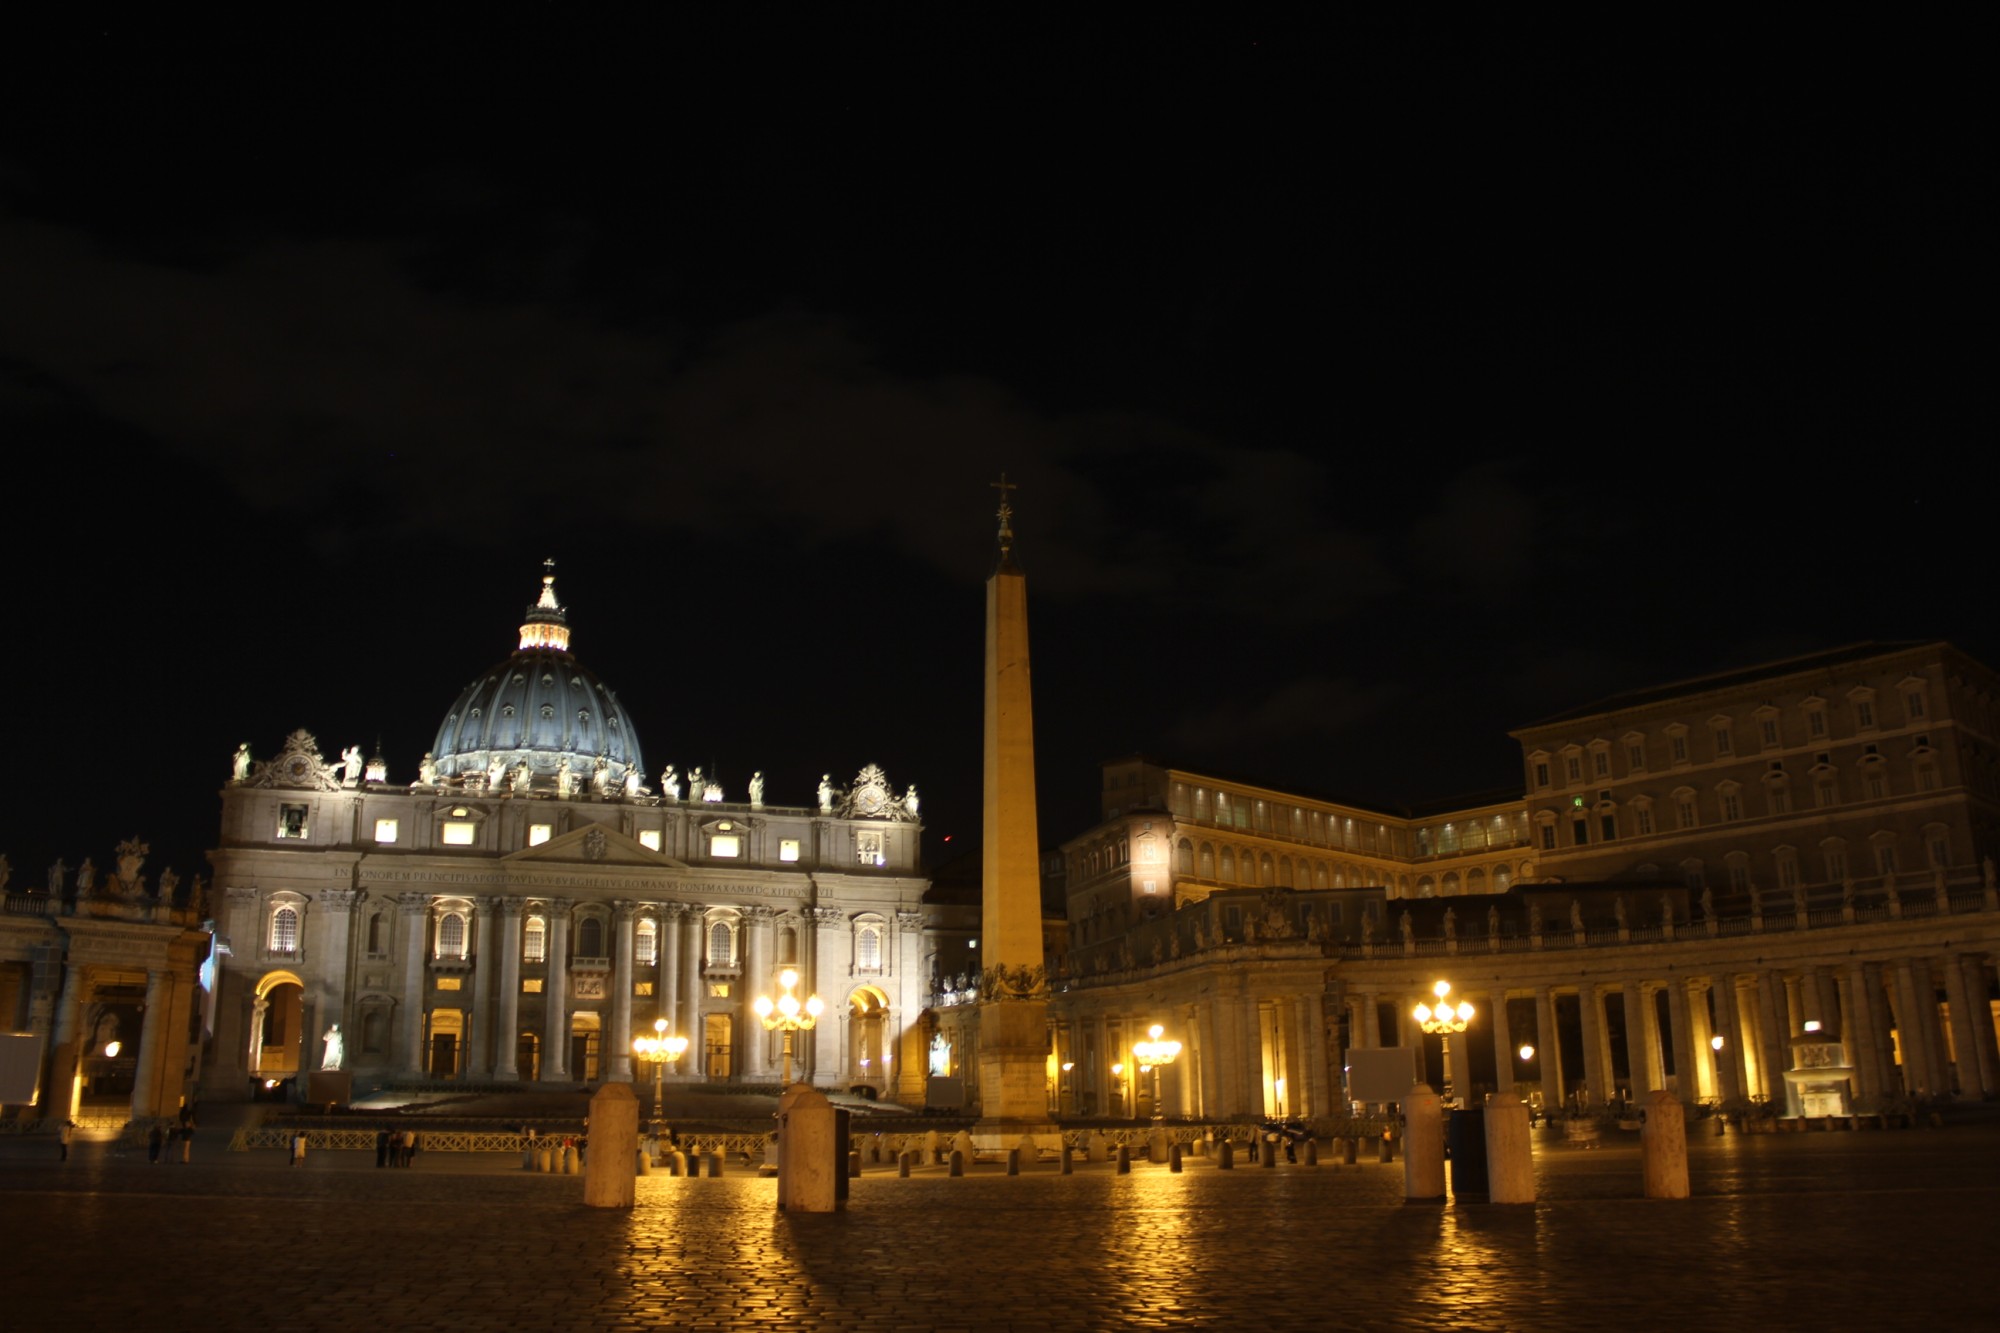 St Peter's square & Basilica